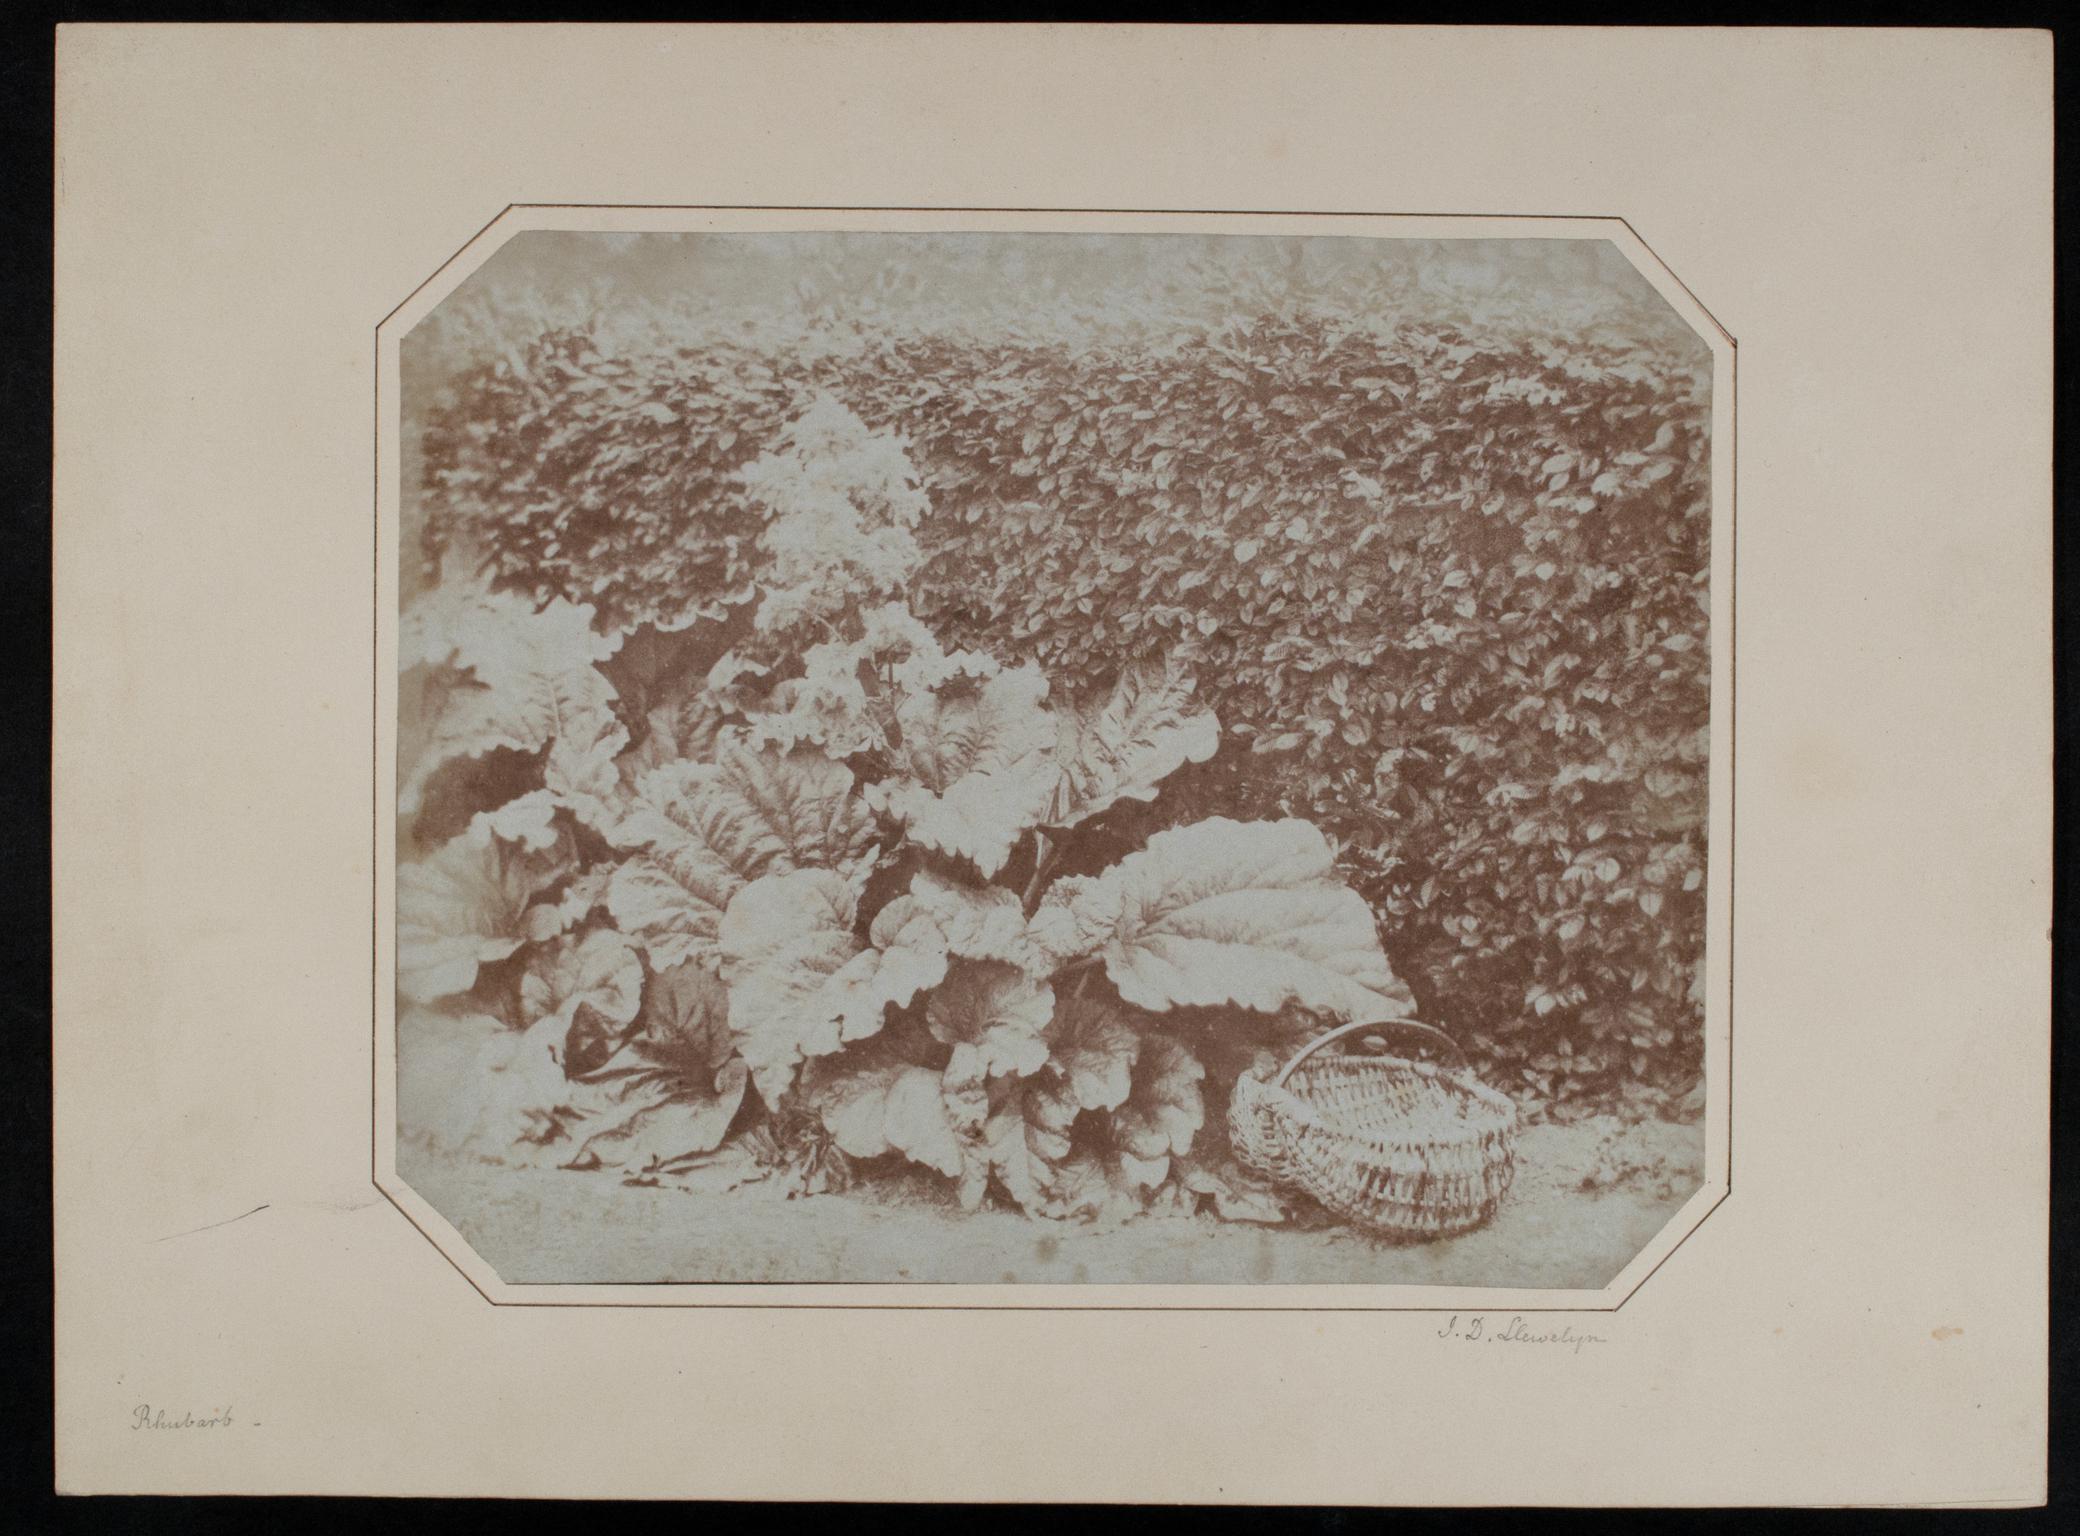 Rhubarb, photograph